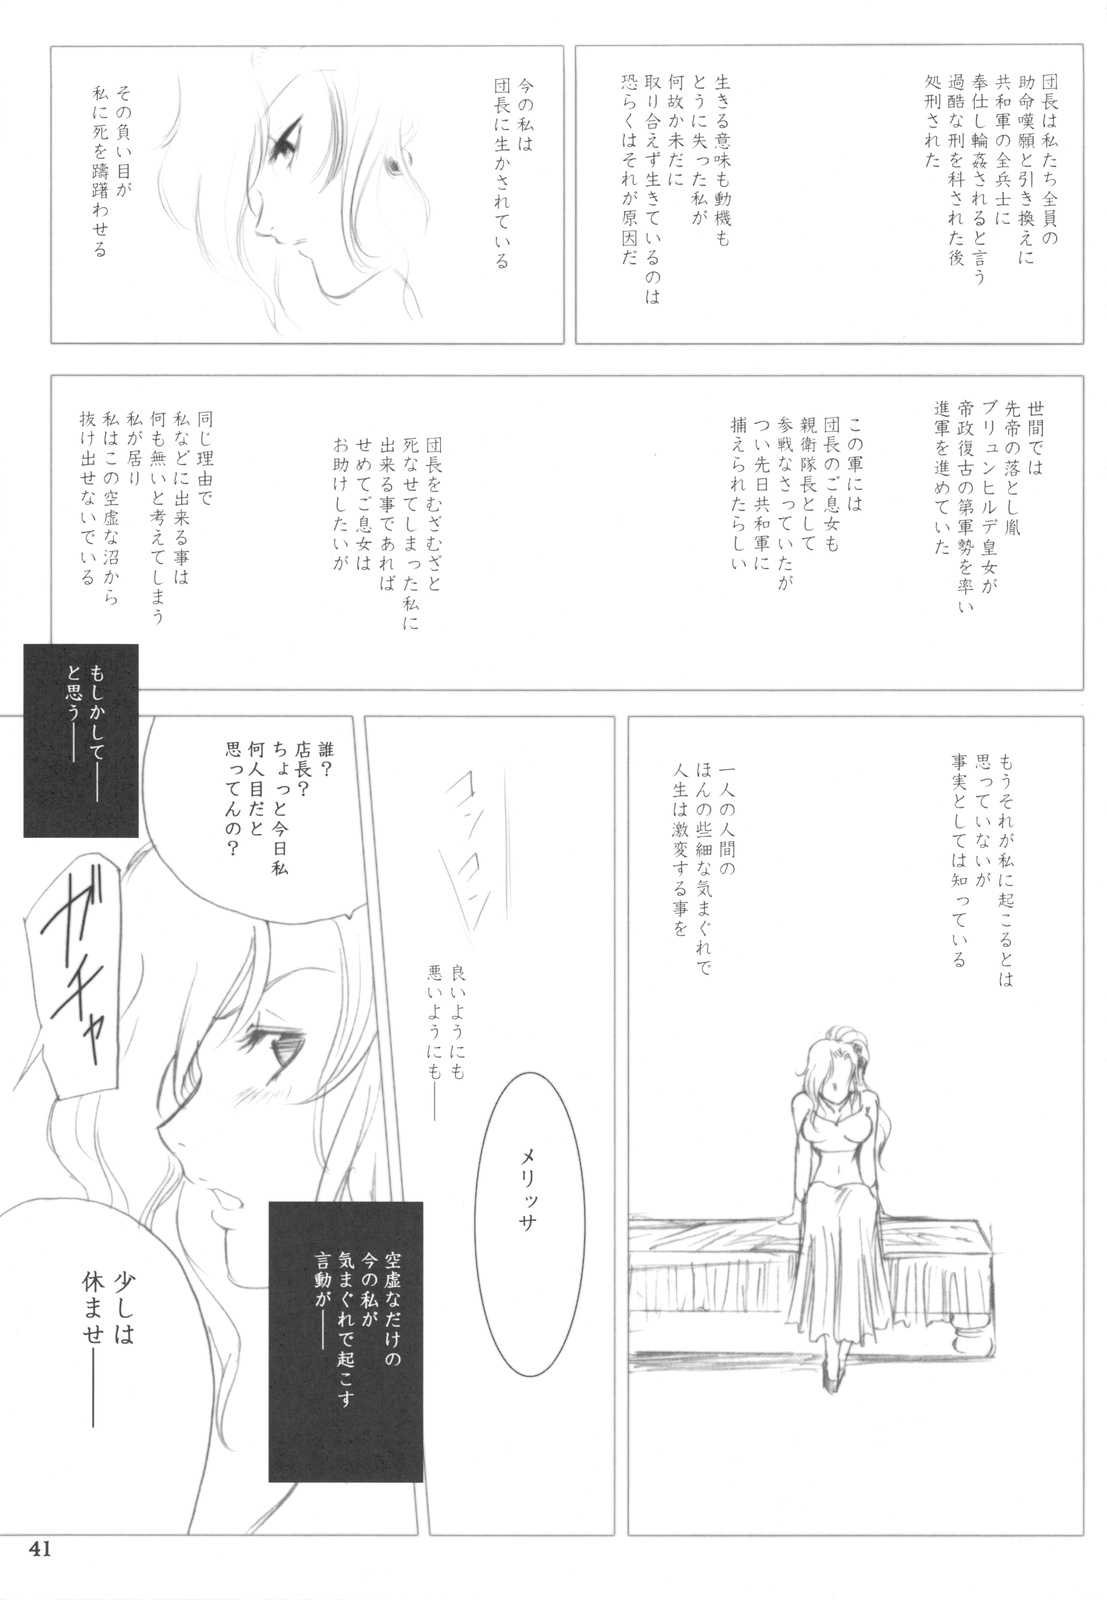 (Comic1☆3)[Ikebukuro DPC] Melissa&#039;s Melancholy (Comic1☆3)[池袋DPC] Melissa&#039;s Melancholy